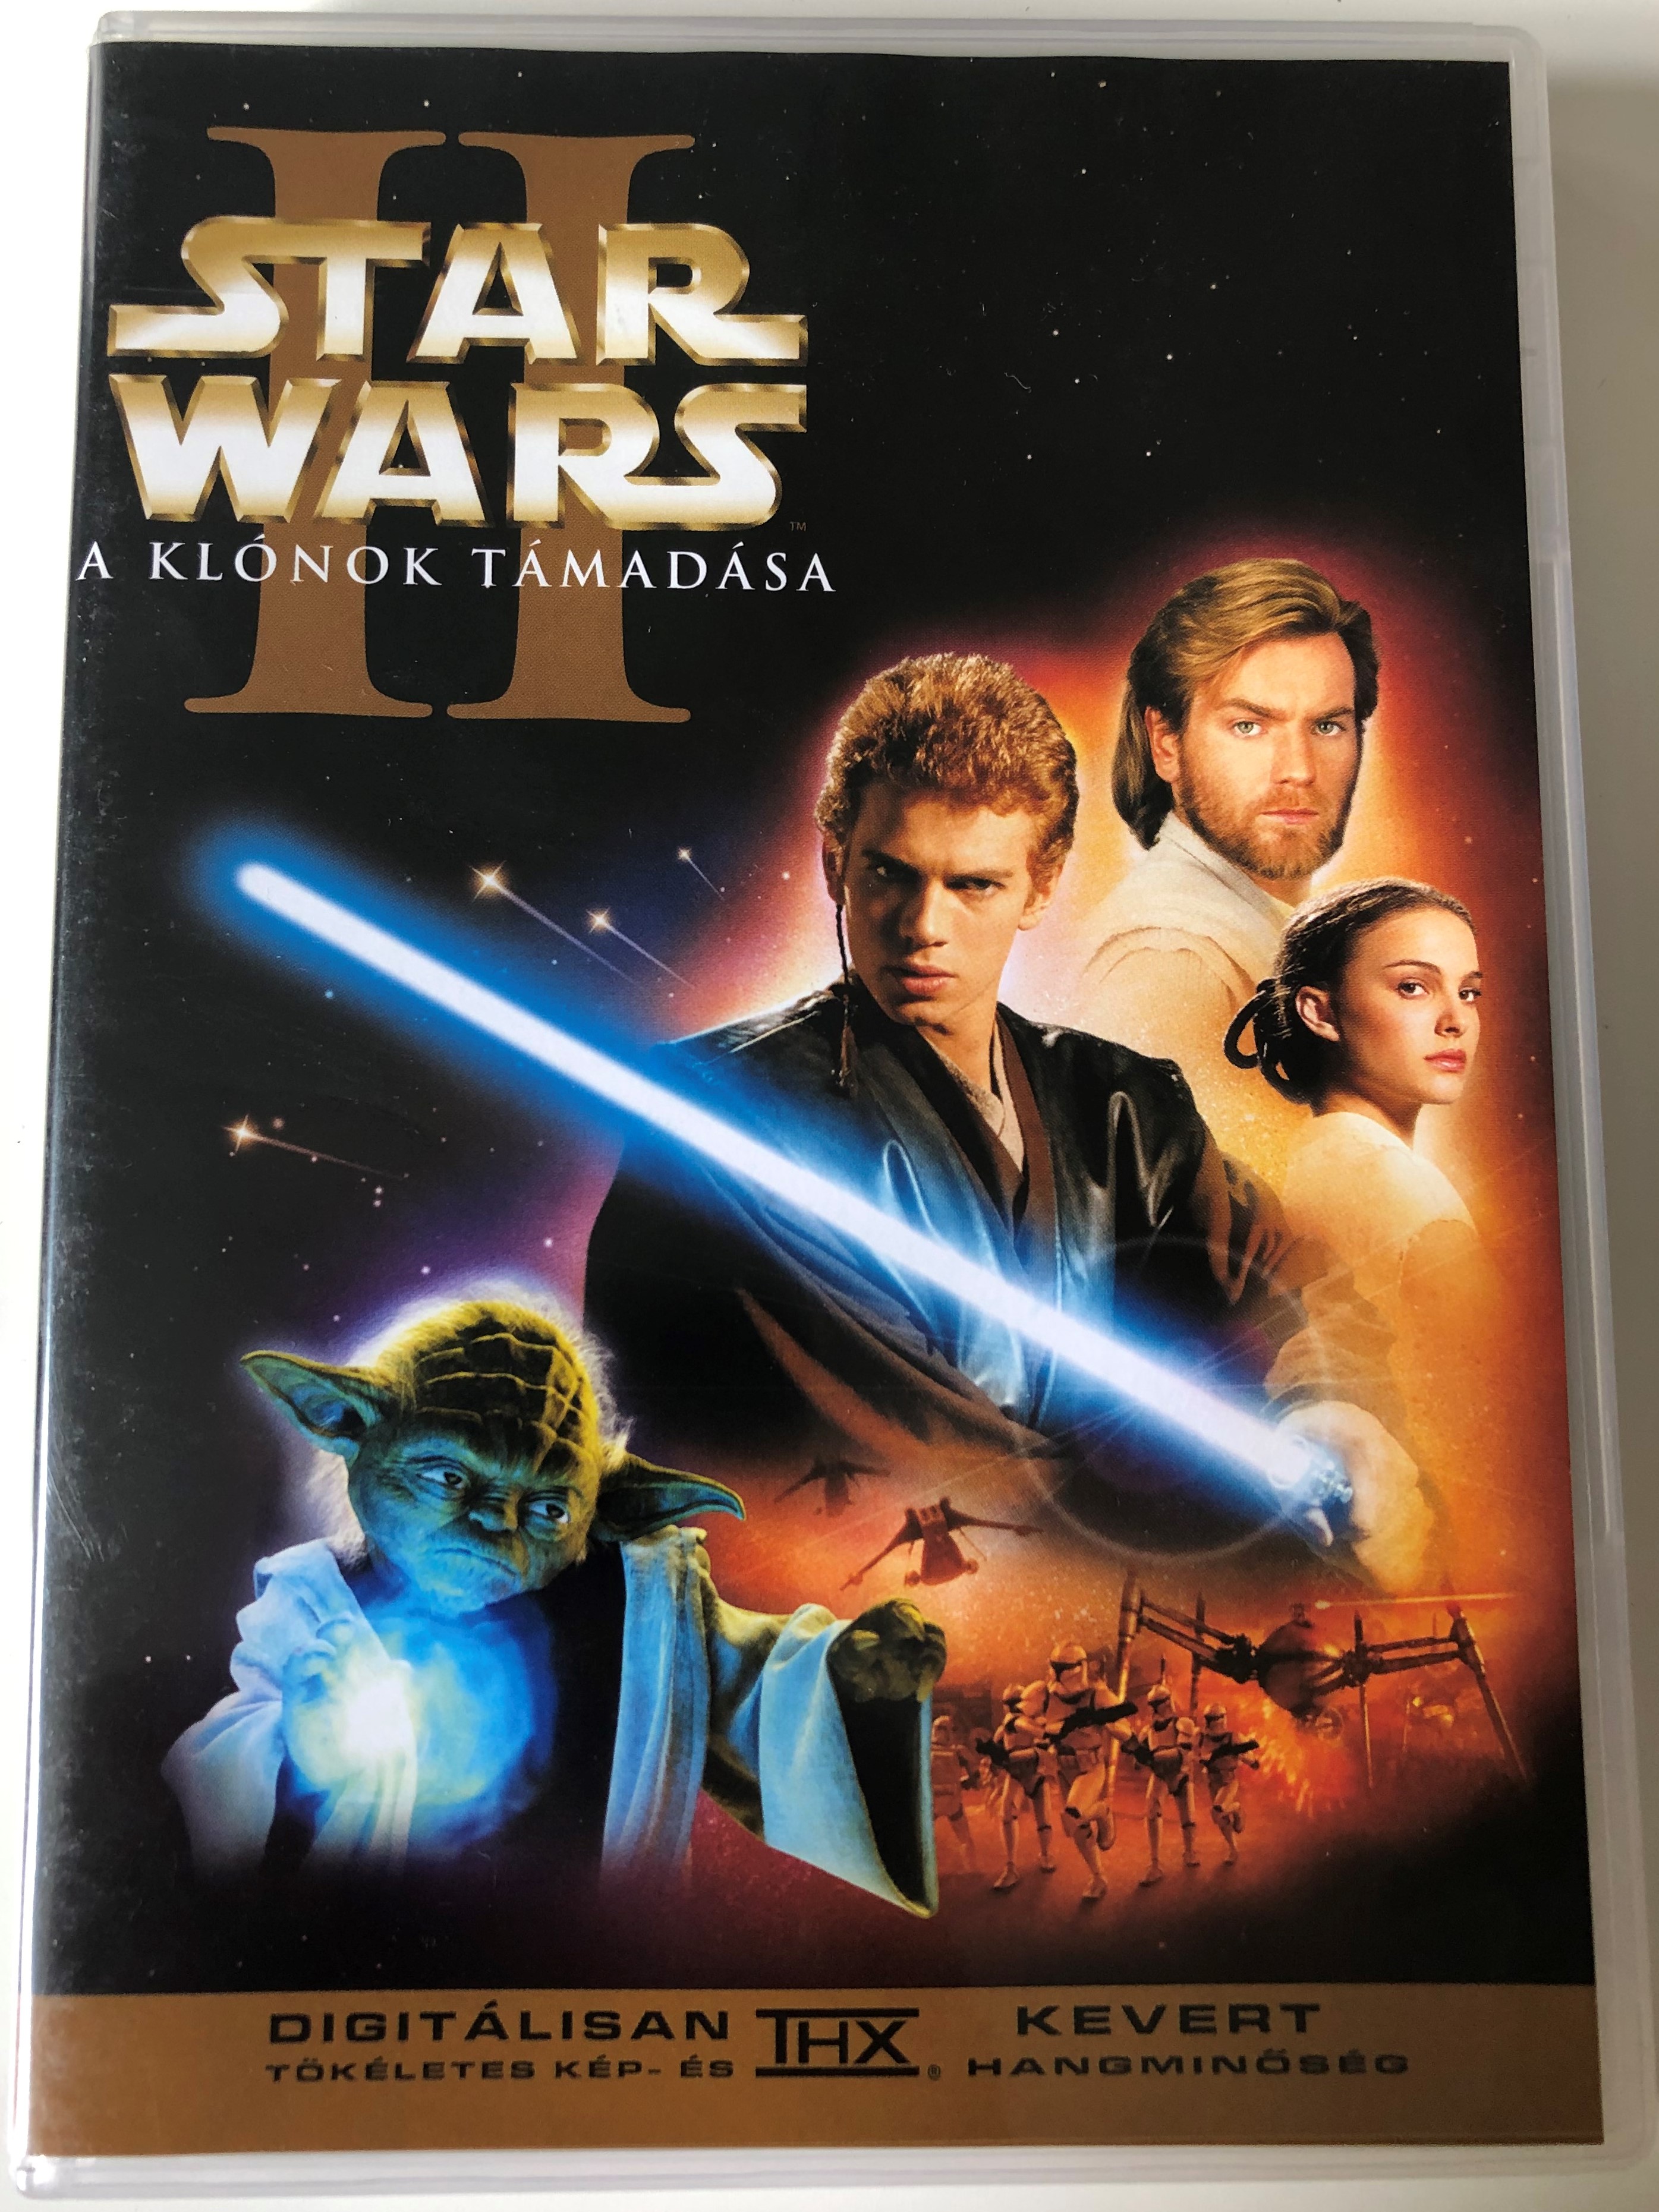 Star Wars Episode II - Attack of the Clones DVD 2002 Star Wars II - A